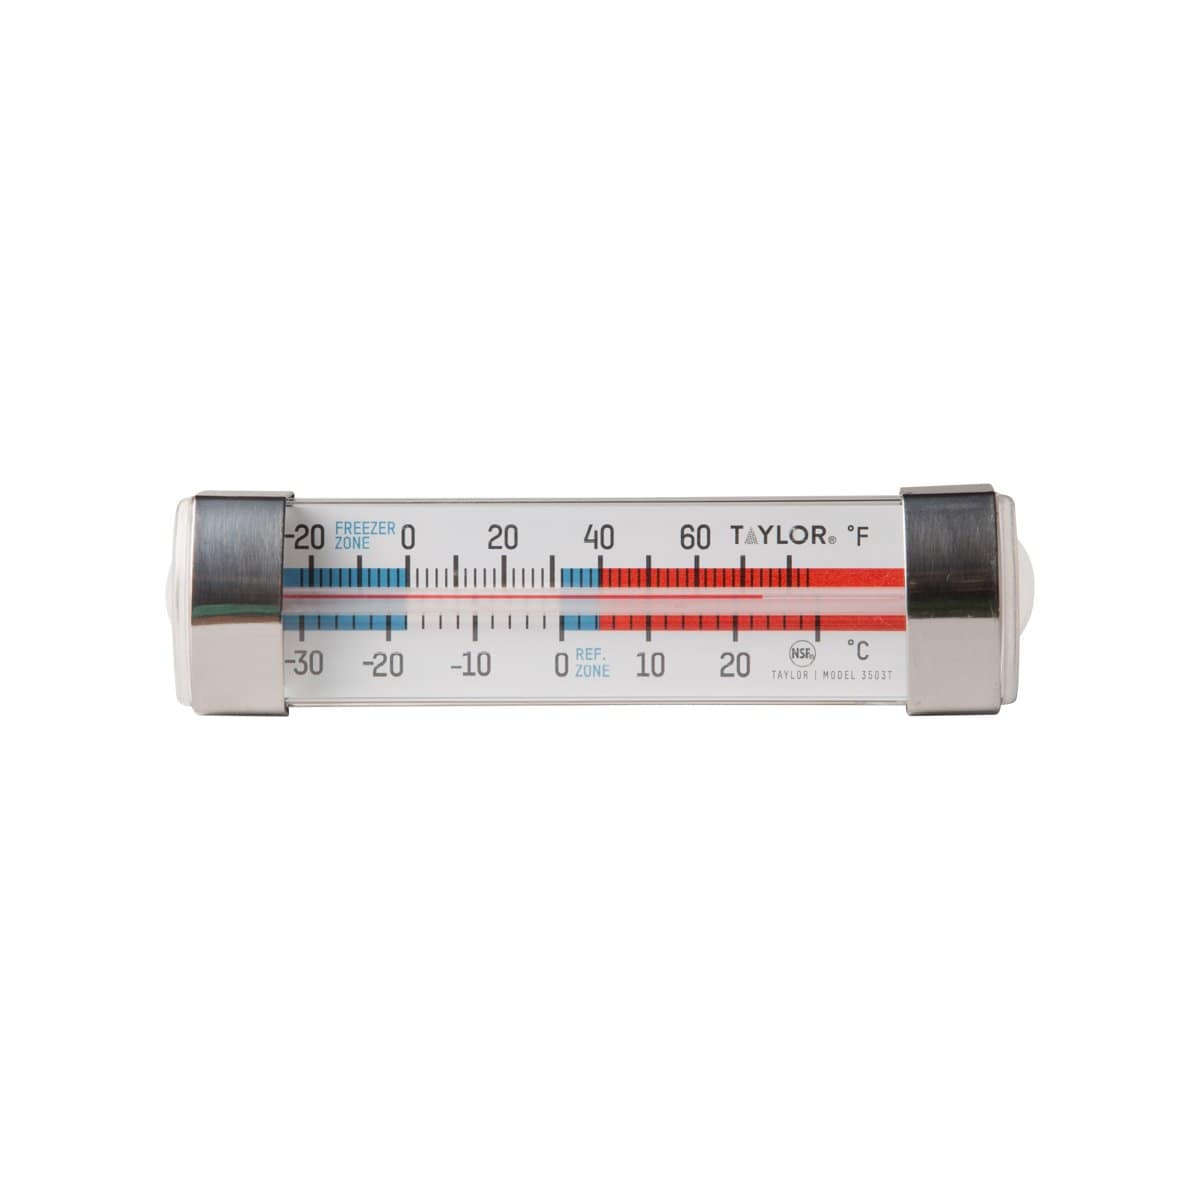 Freezer / Refrigerator Thermometer